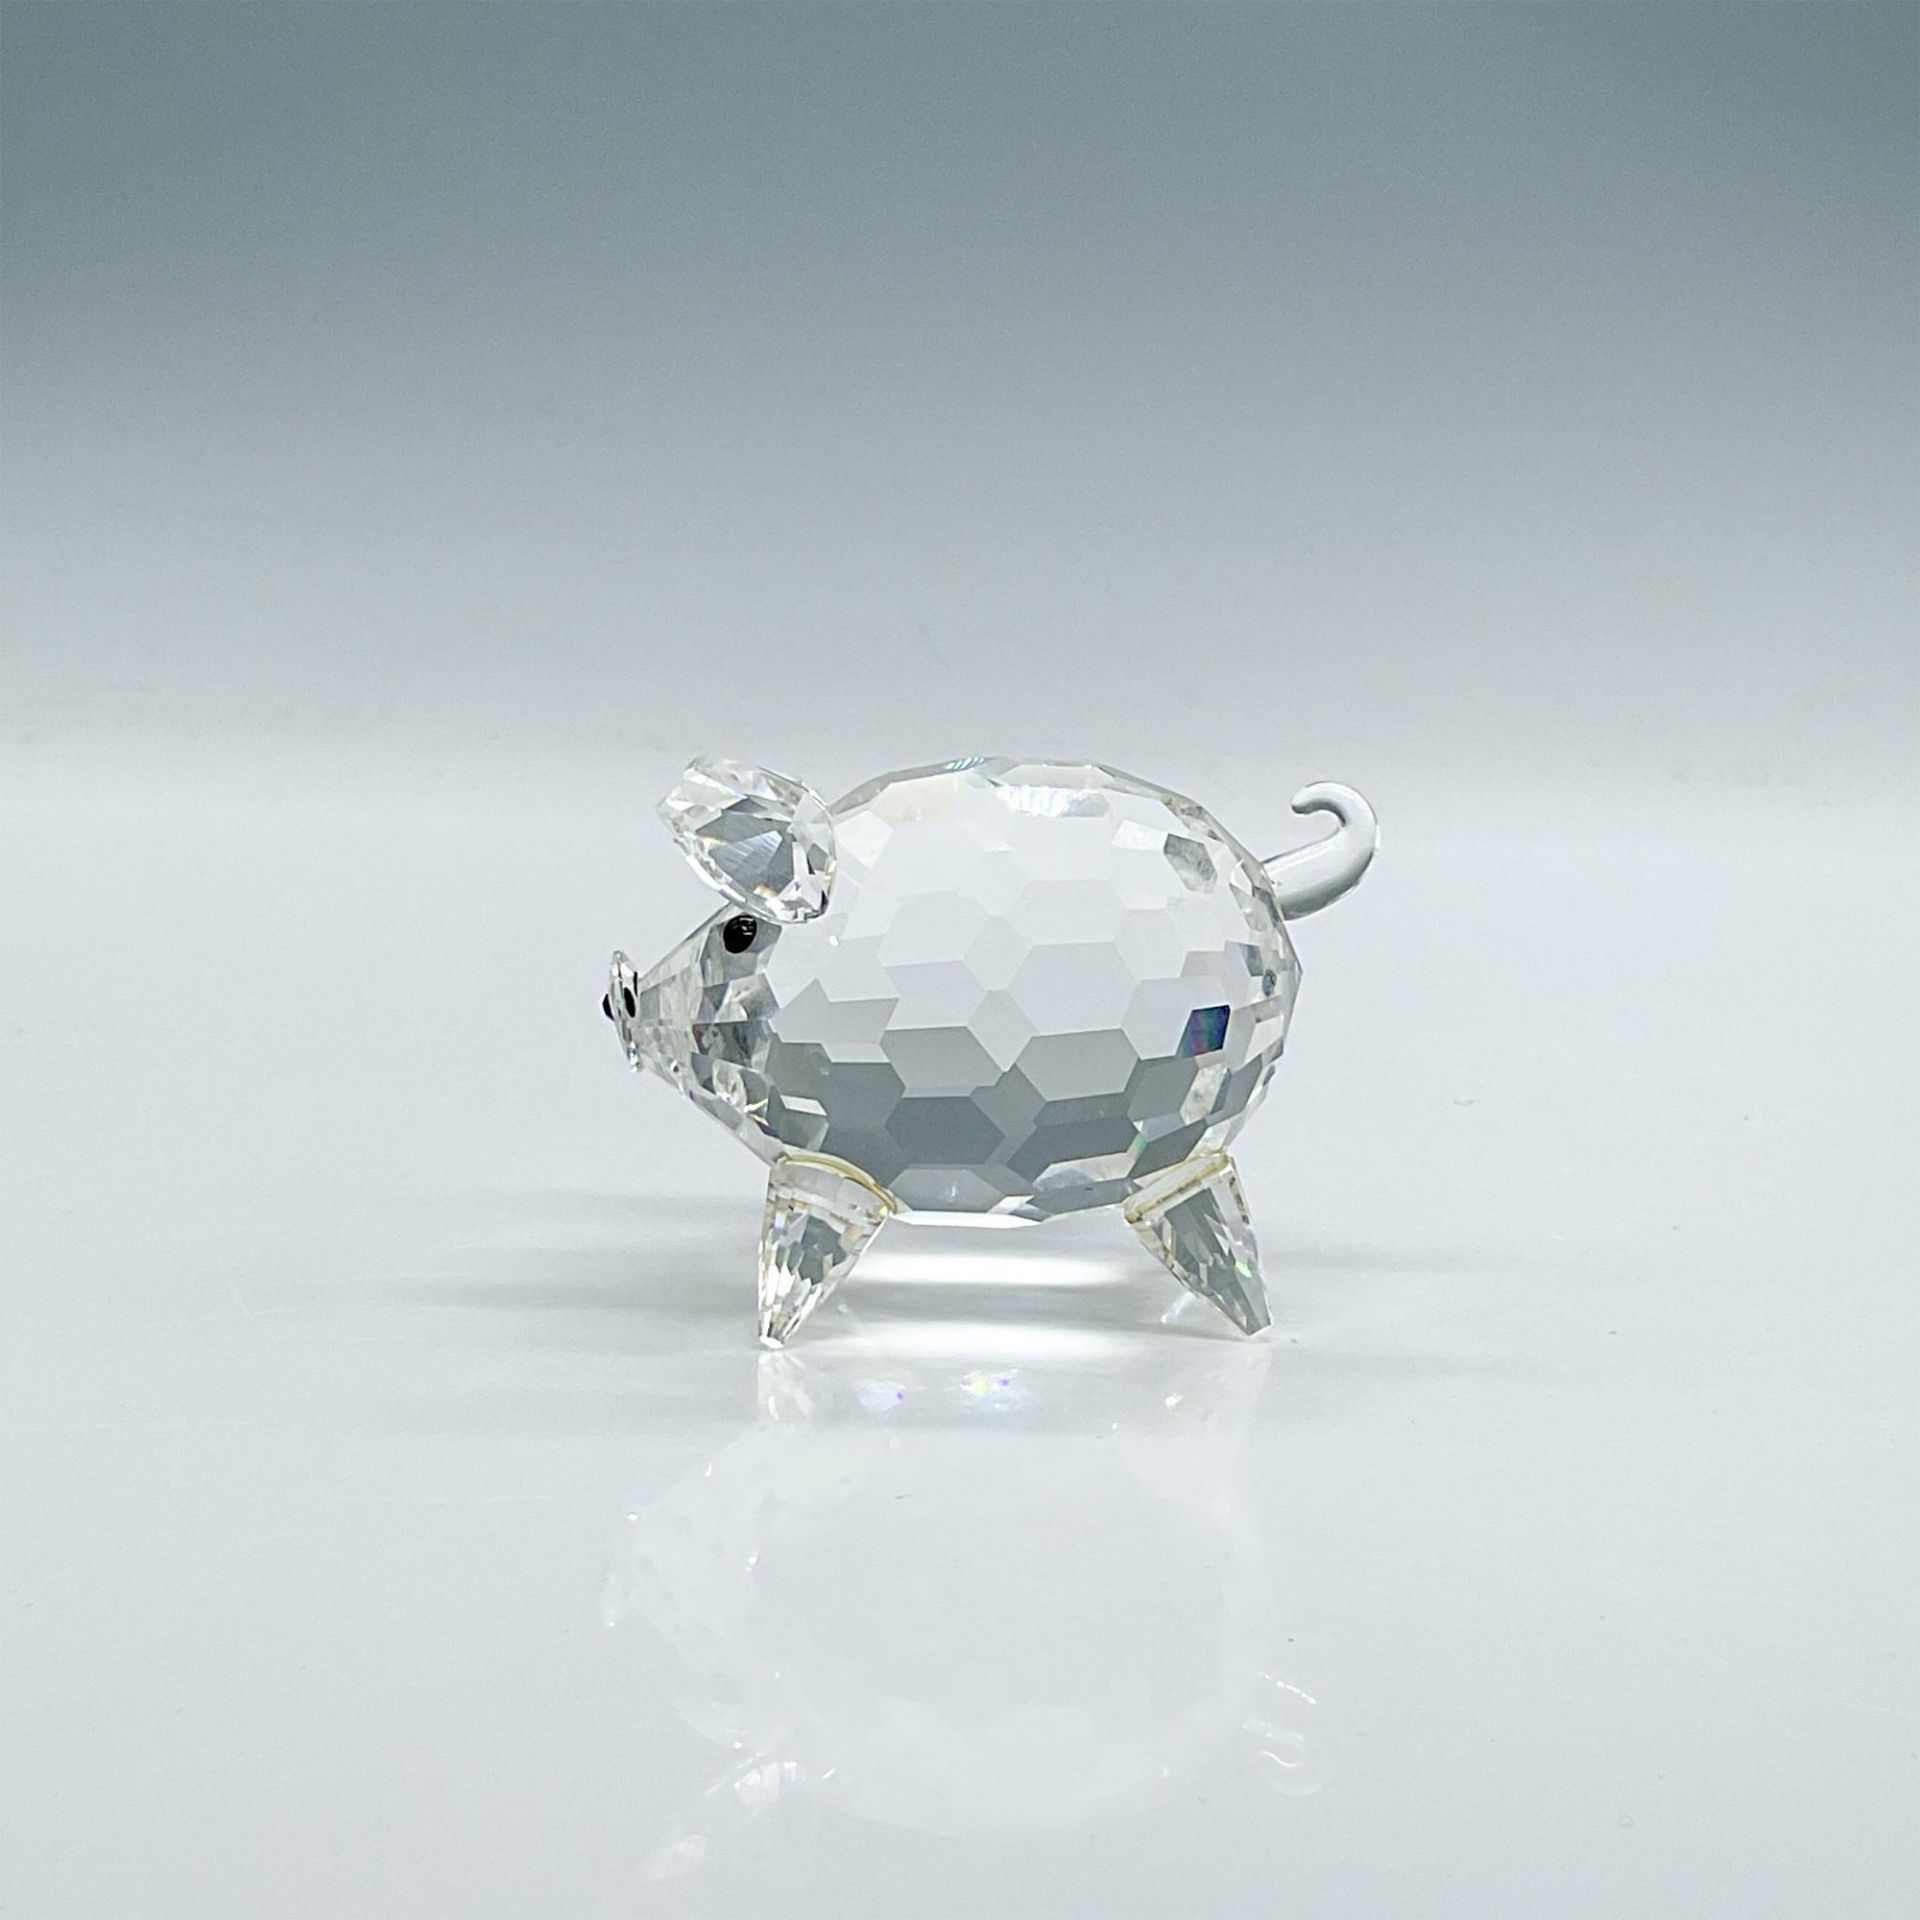 Swarovski Crystal Figurine, Pig - Image 3 of 4